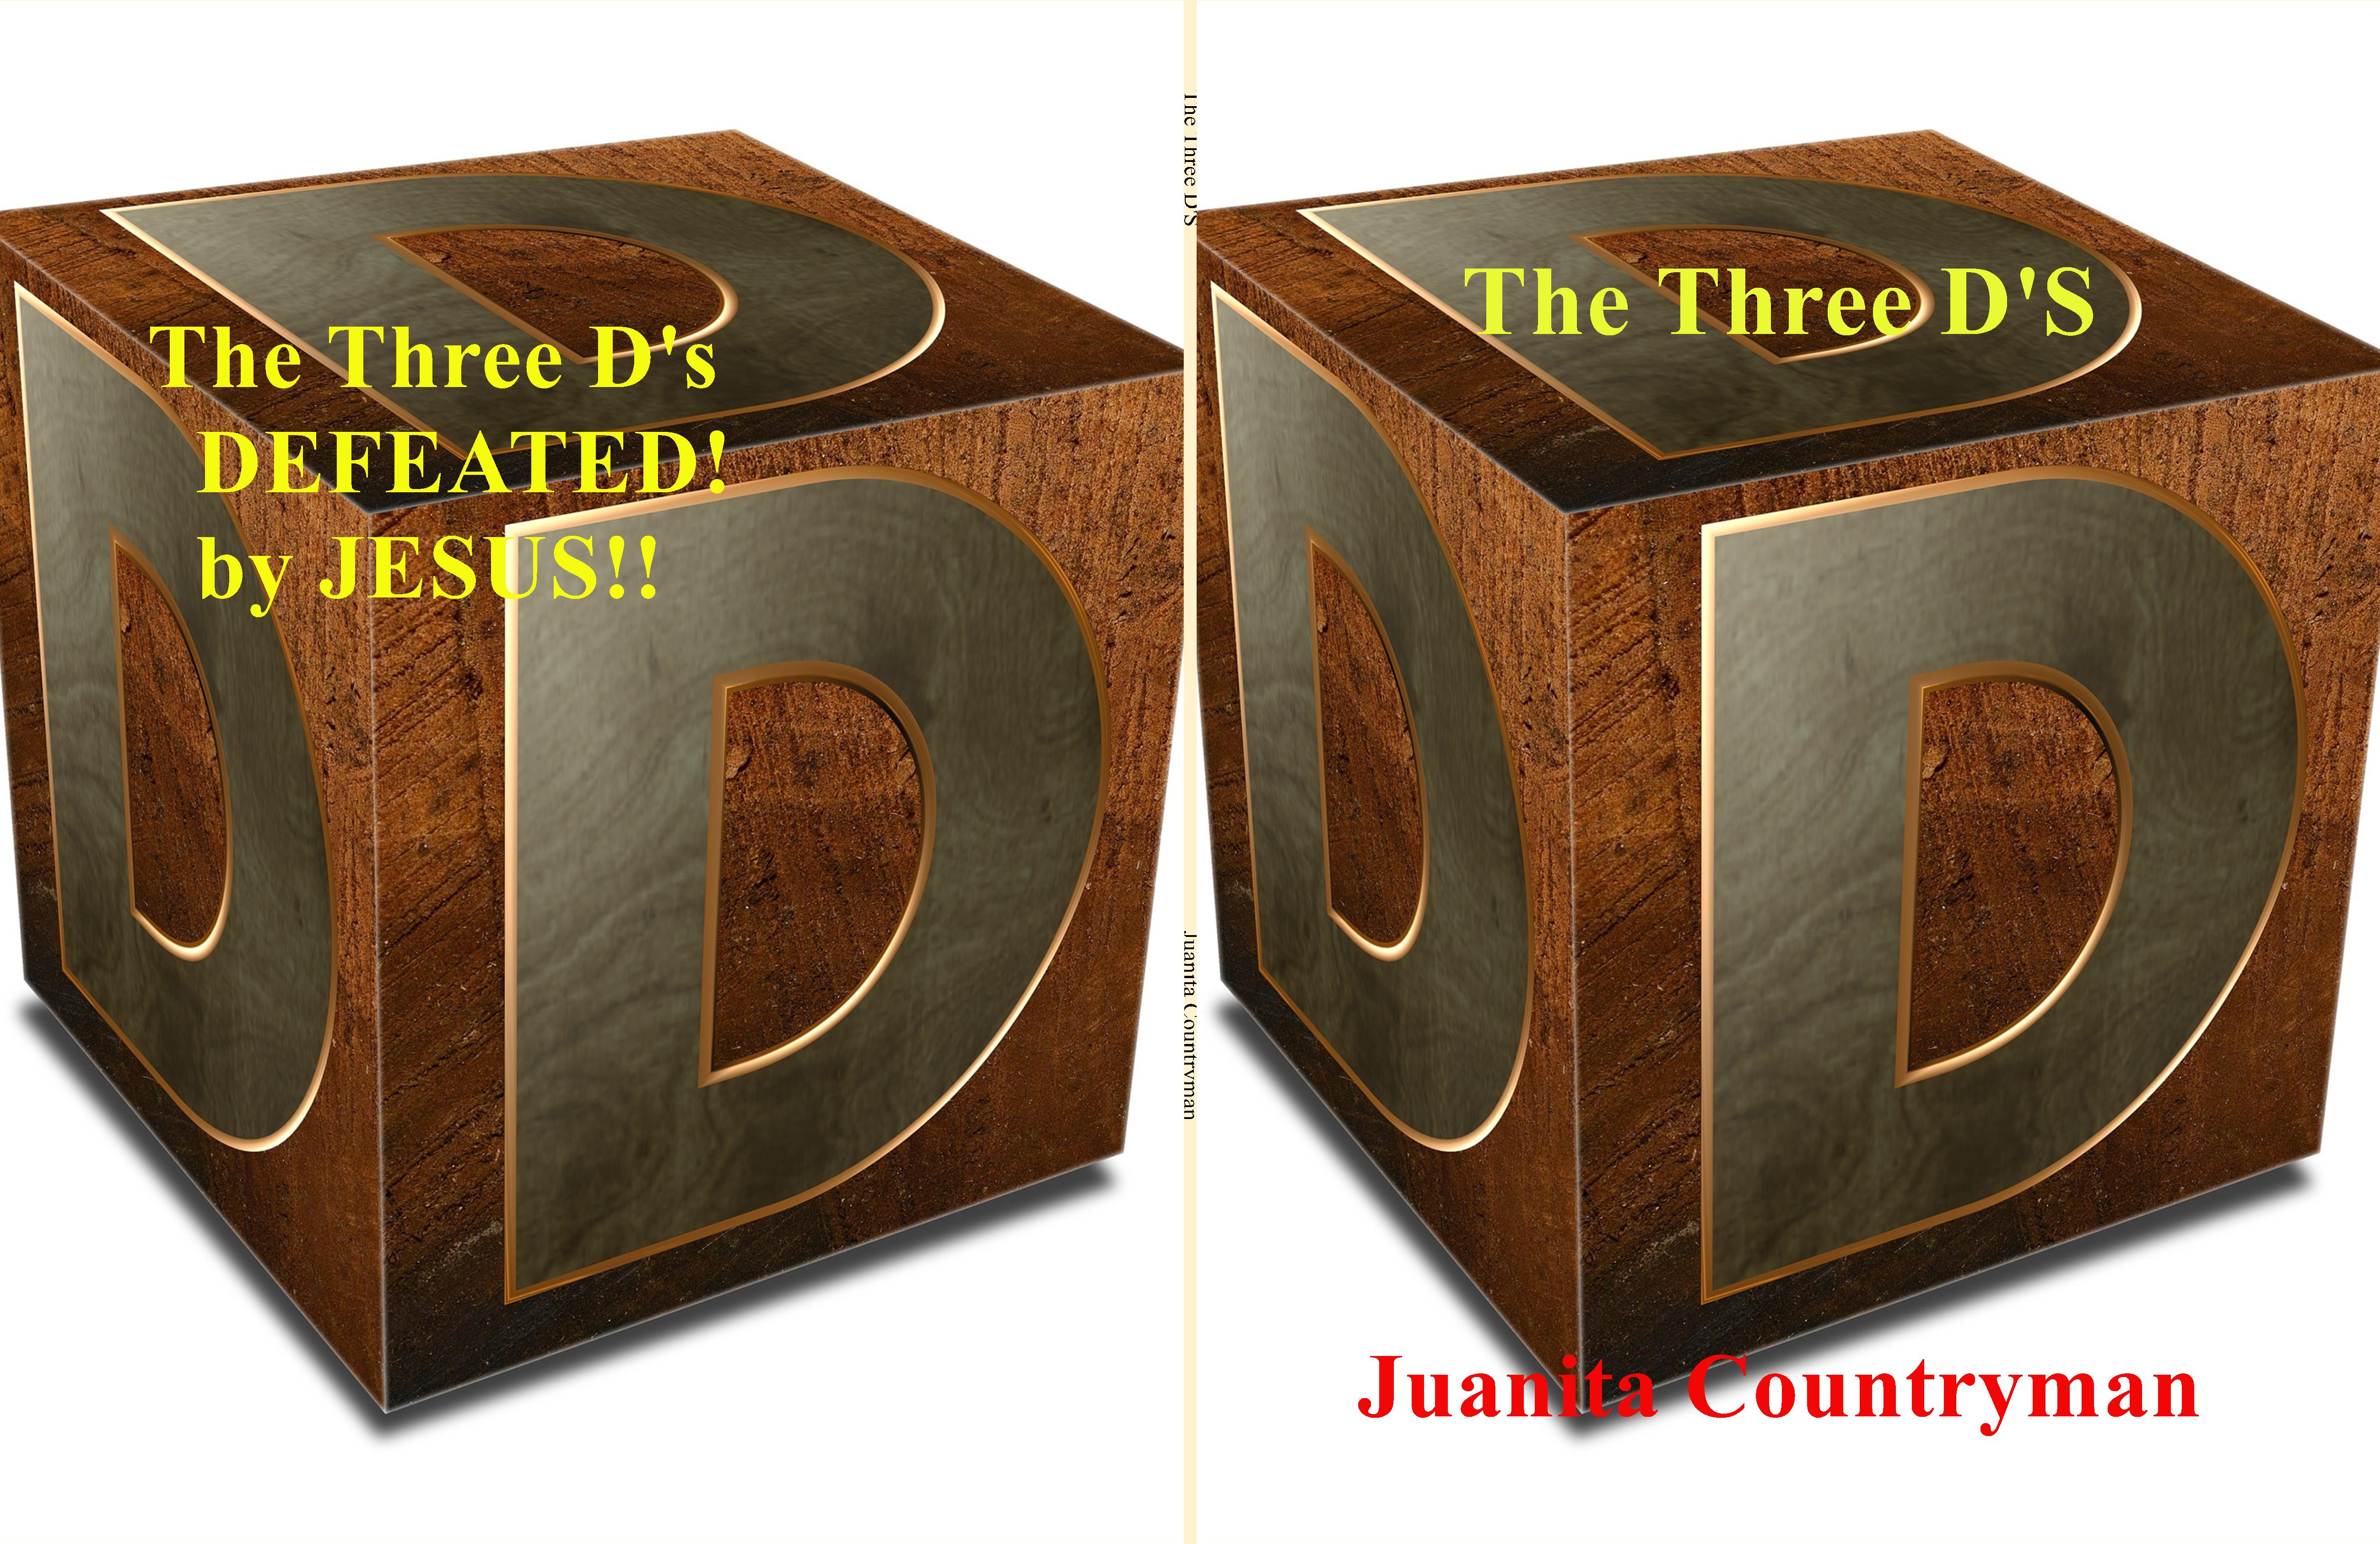 The Three D